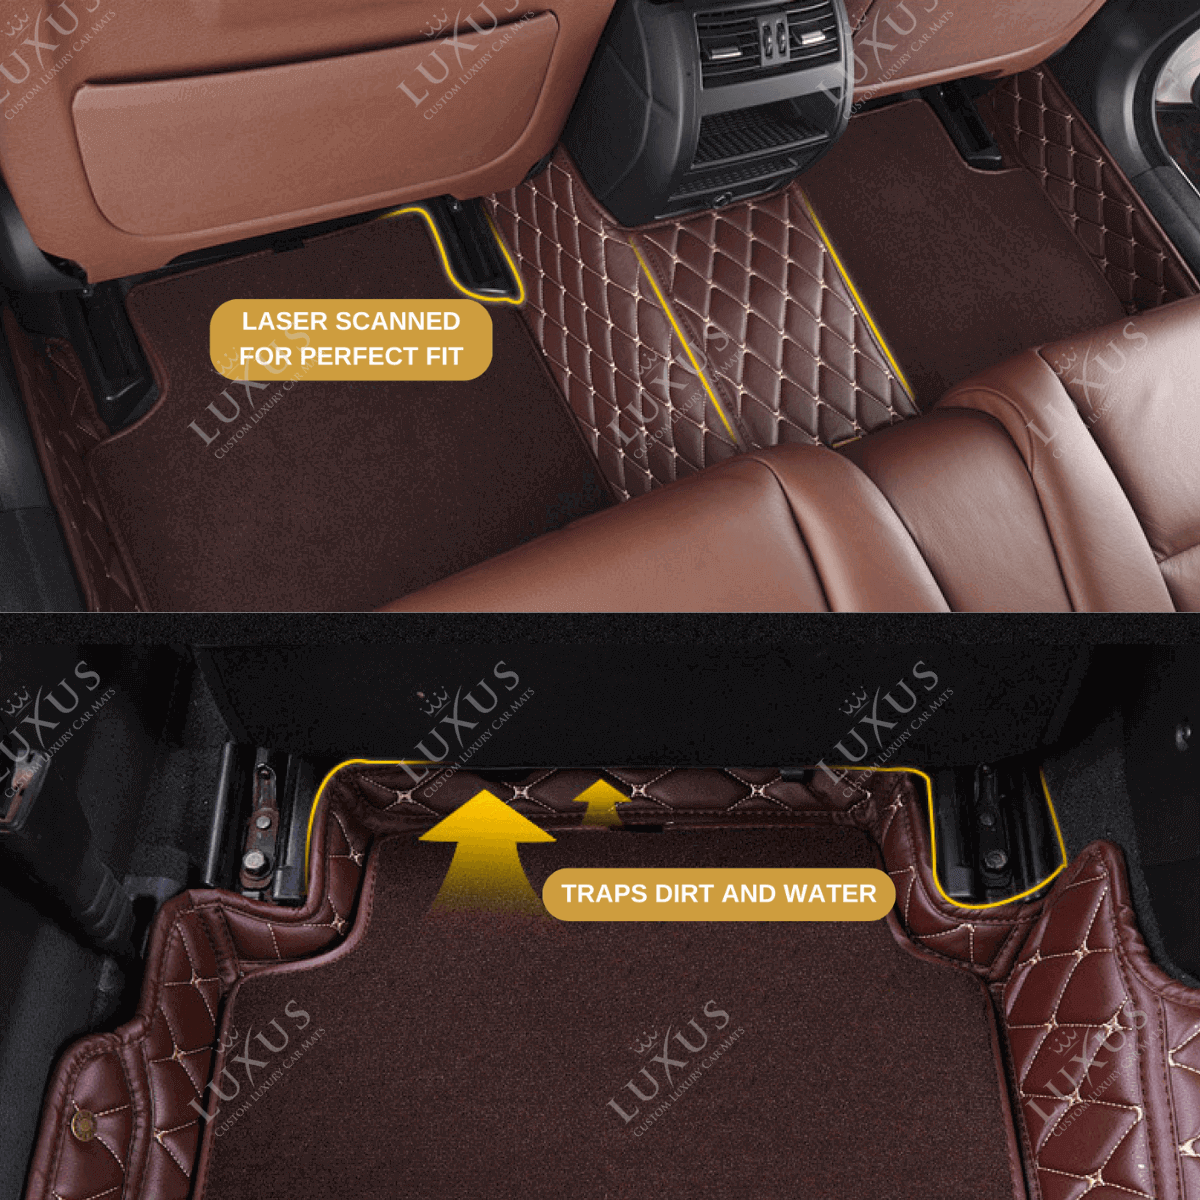 Black & Black Stitching Honeycomb Base & Red Top Carpet Double Layer Luxury Car Mats Set